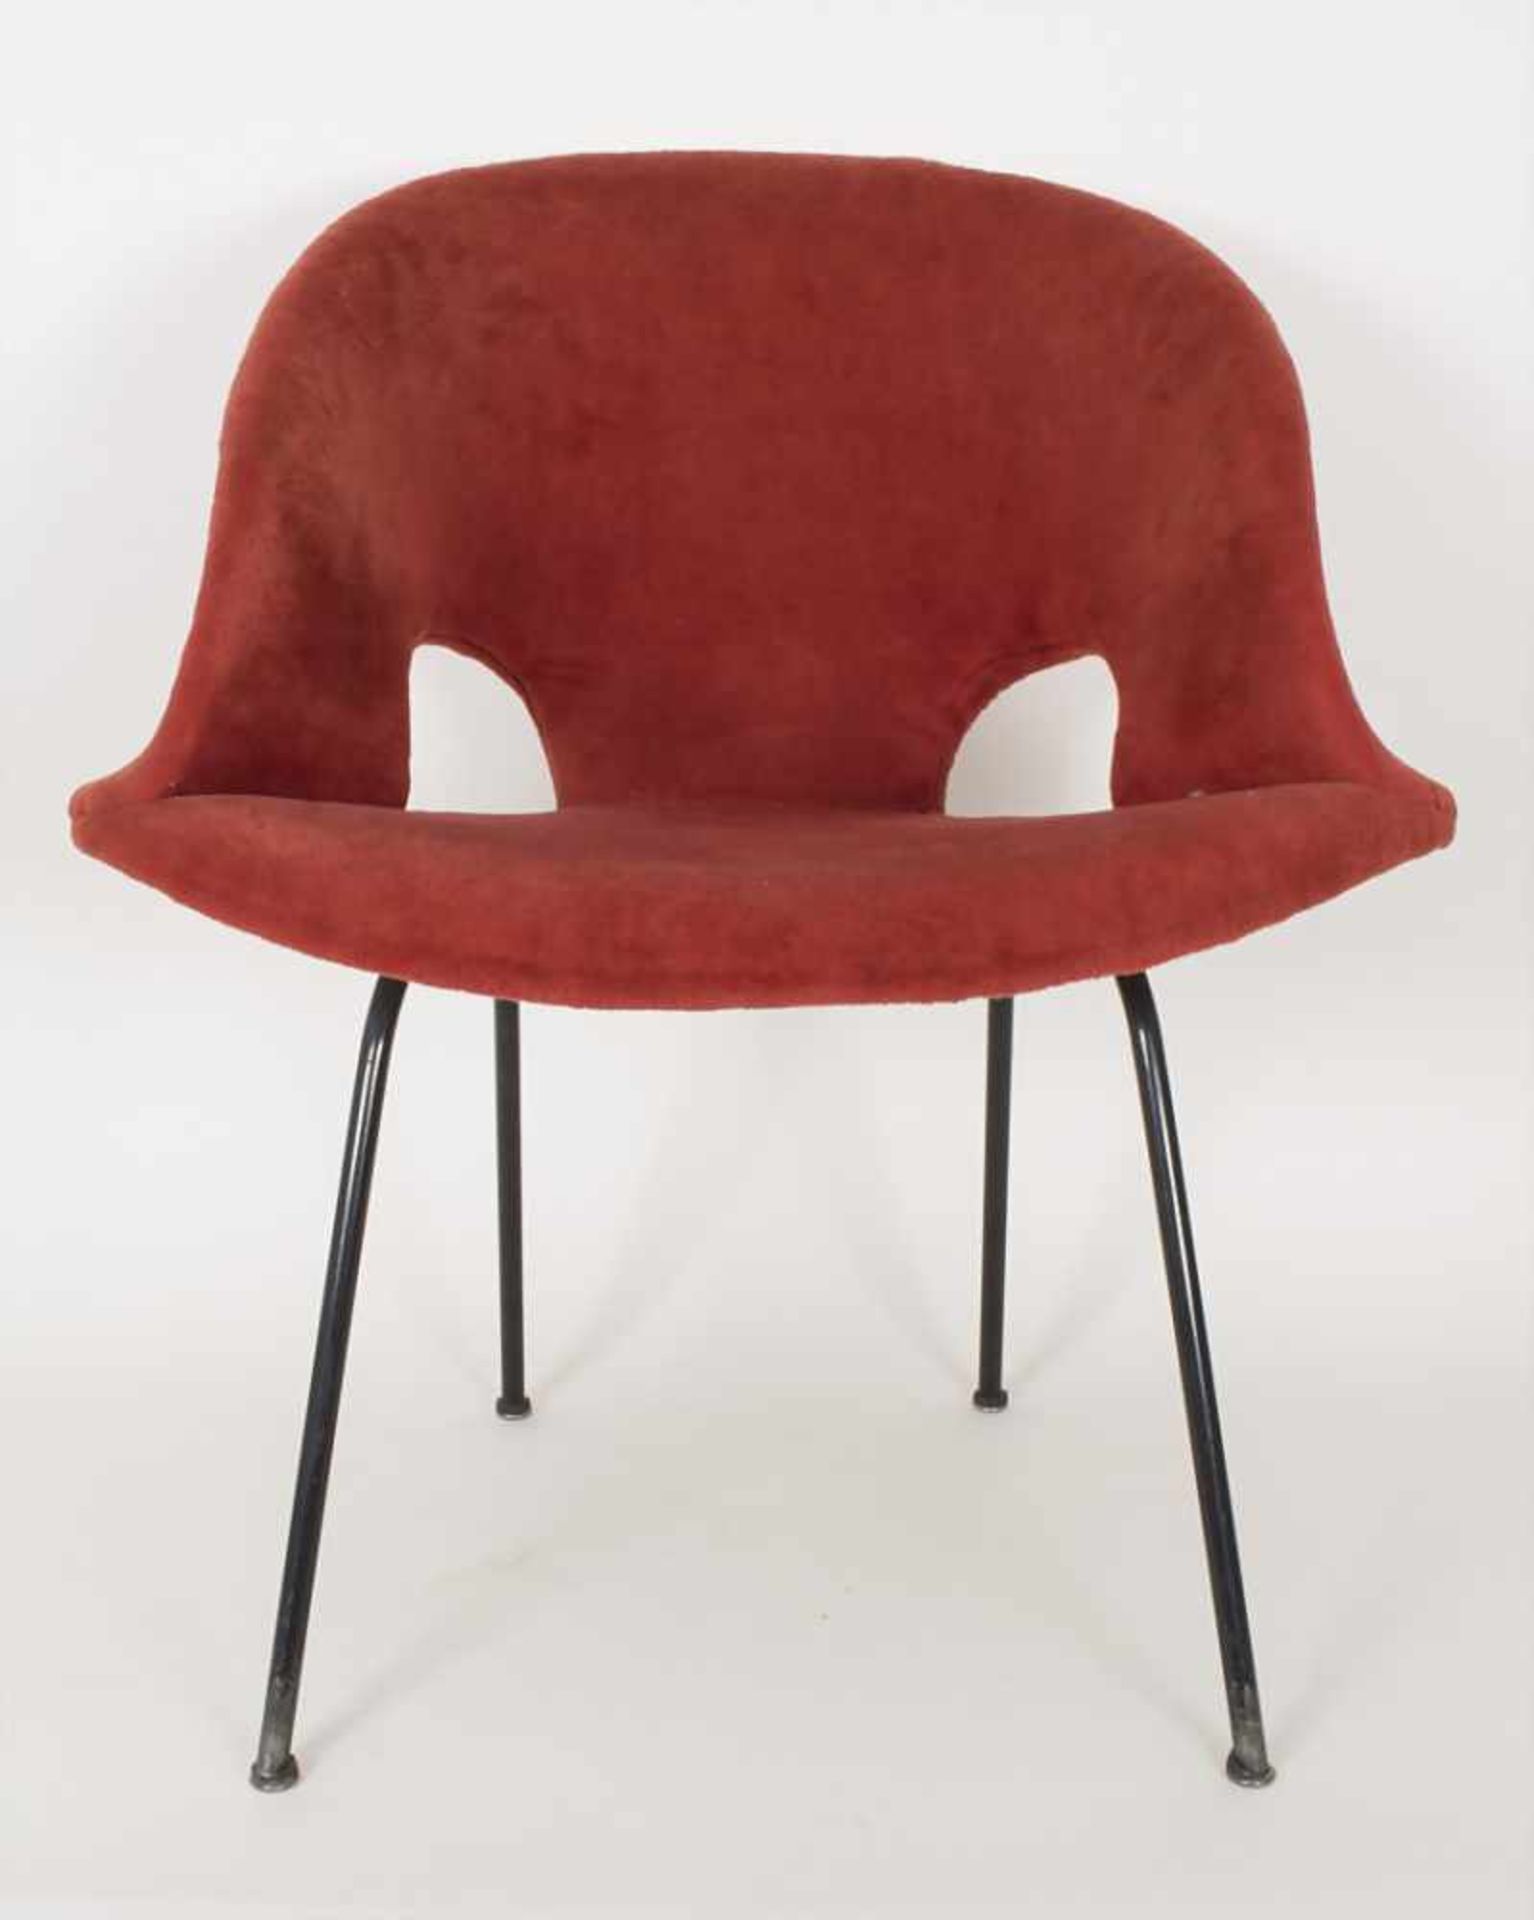 Designerstuhl / A designer chair, um 1970Entwurf: Eddie Harlis (1928 Osnabrück - 1985 Mallorca),